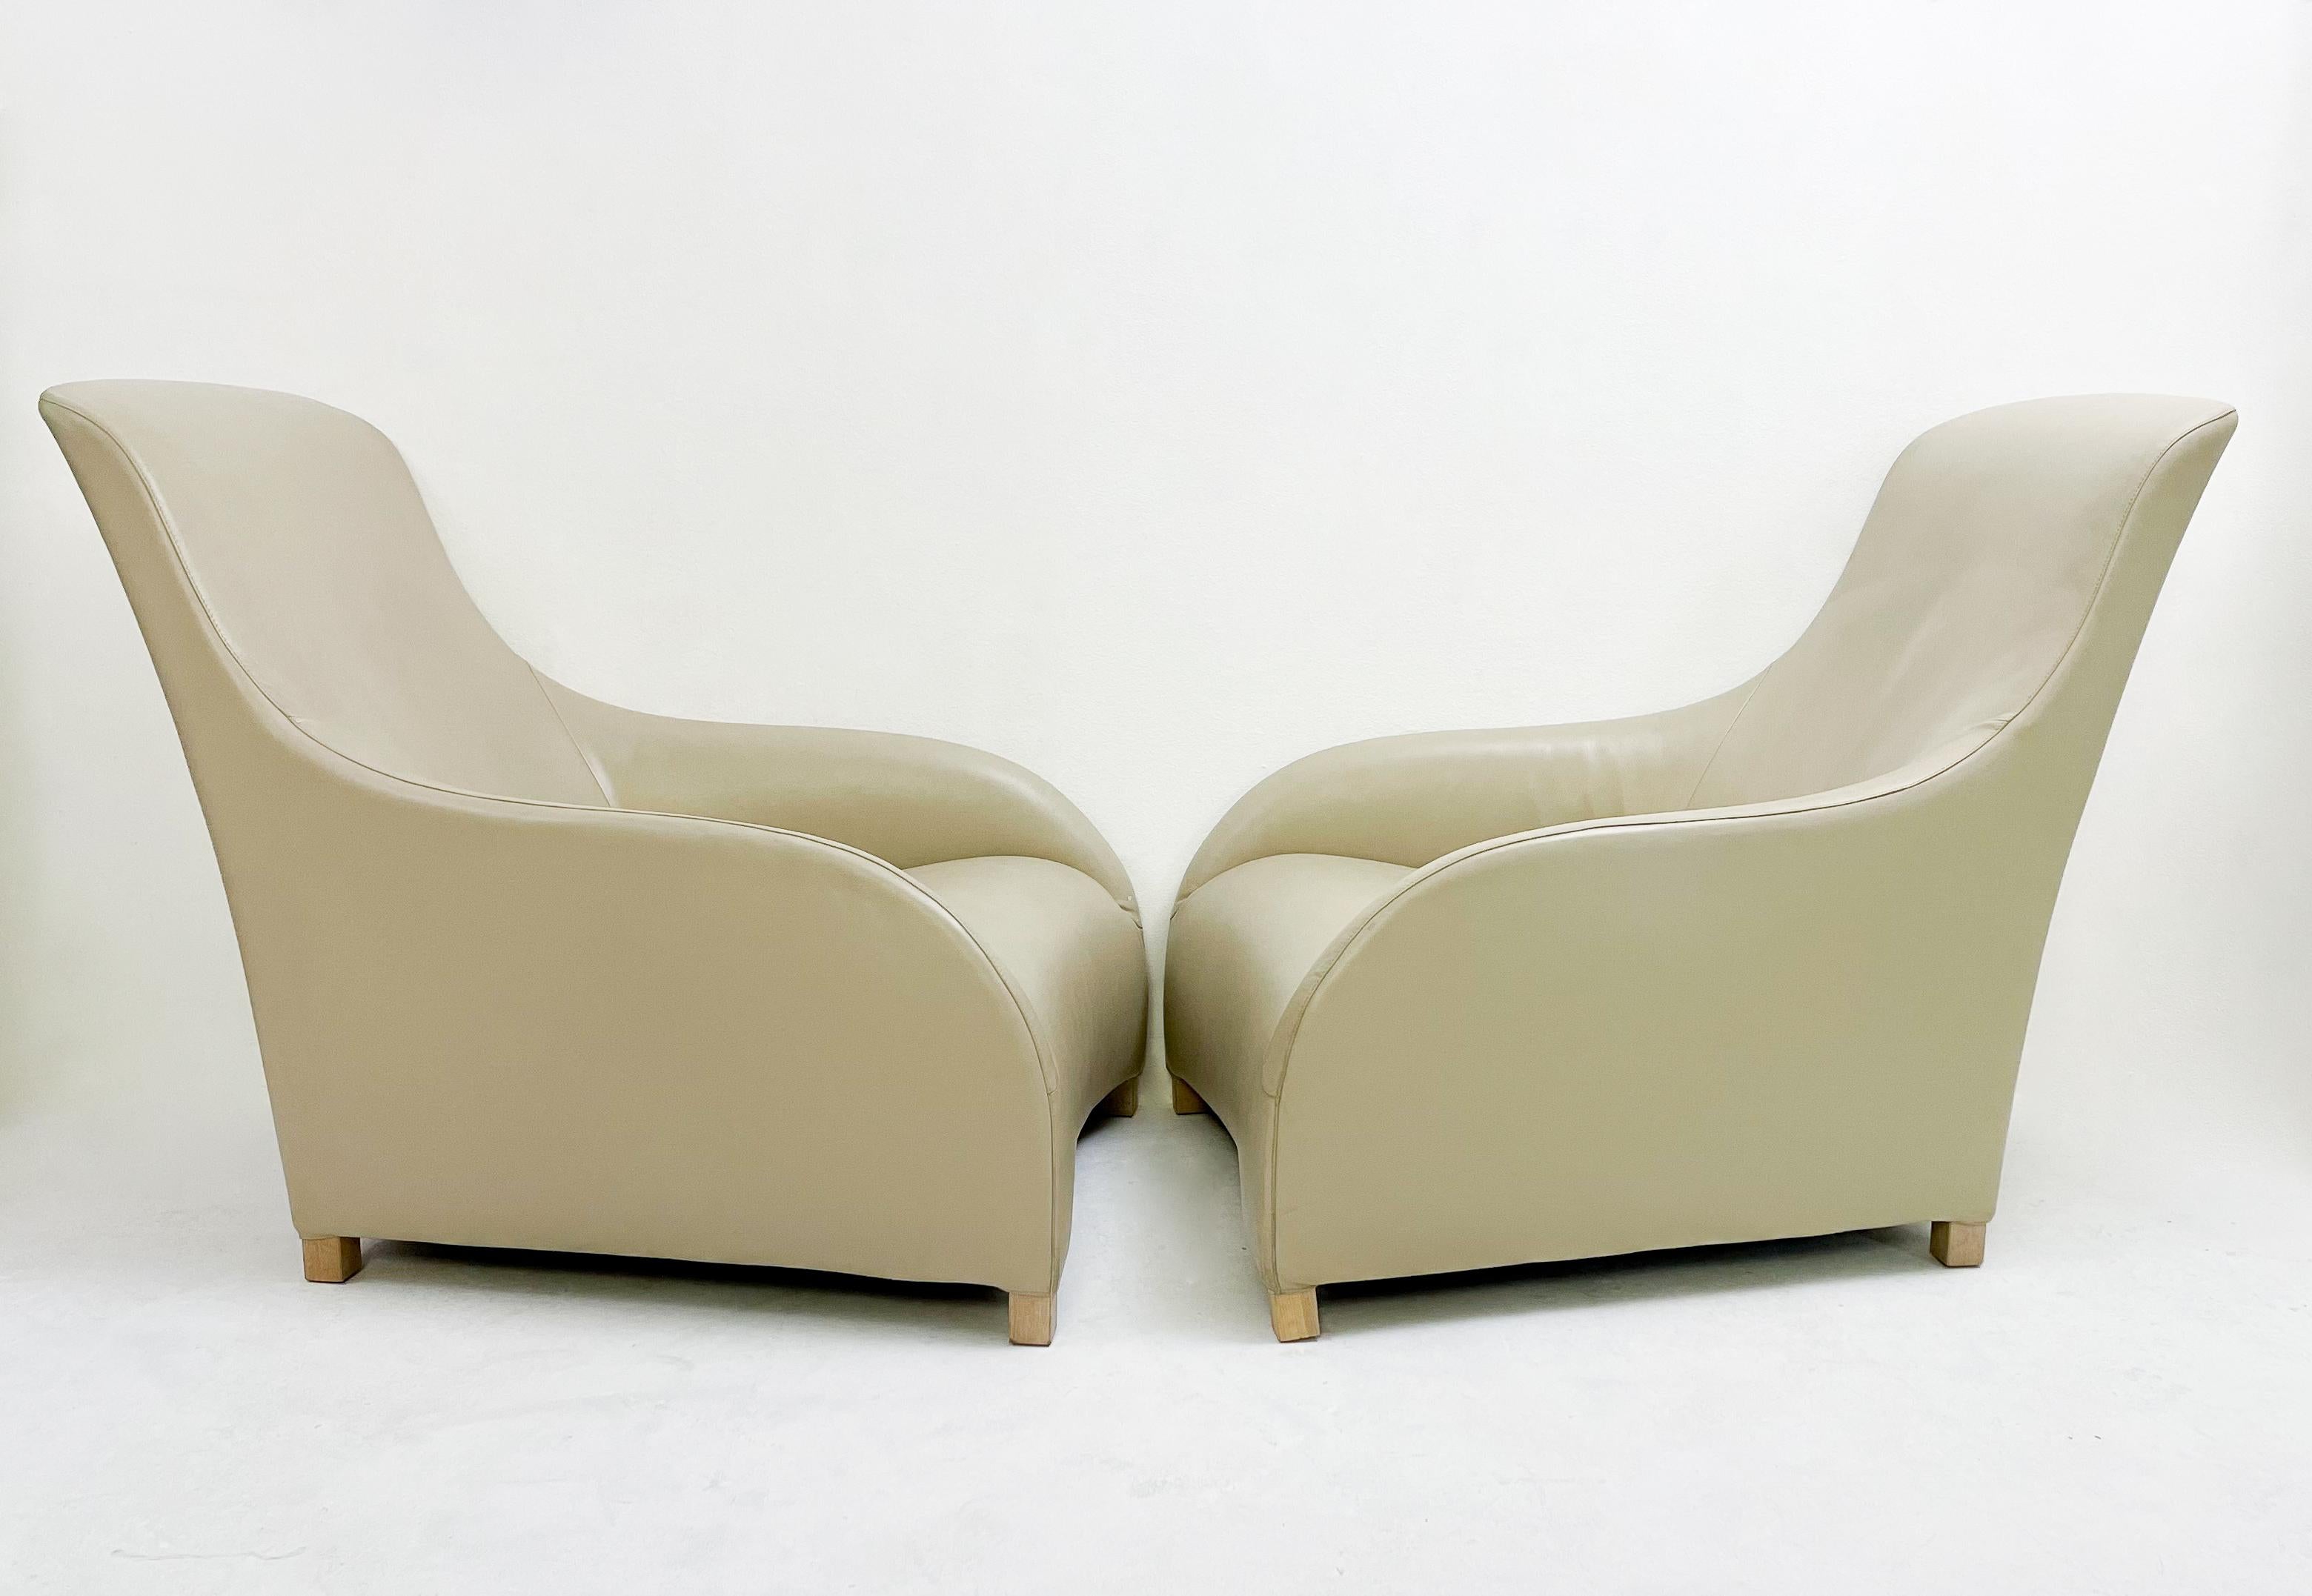 Late 20th Century Mid-Century Modern Pair of Kalos Armchairs by Antonio Citterio for B&B Italia For Sale